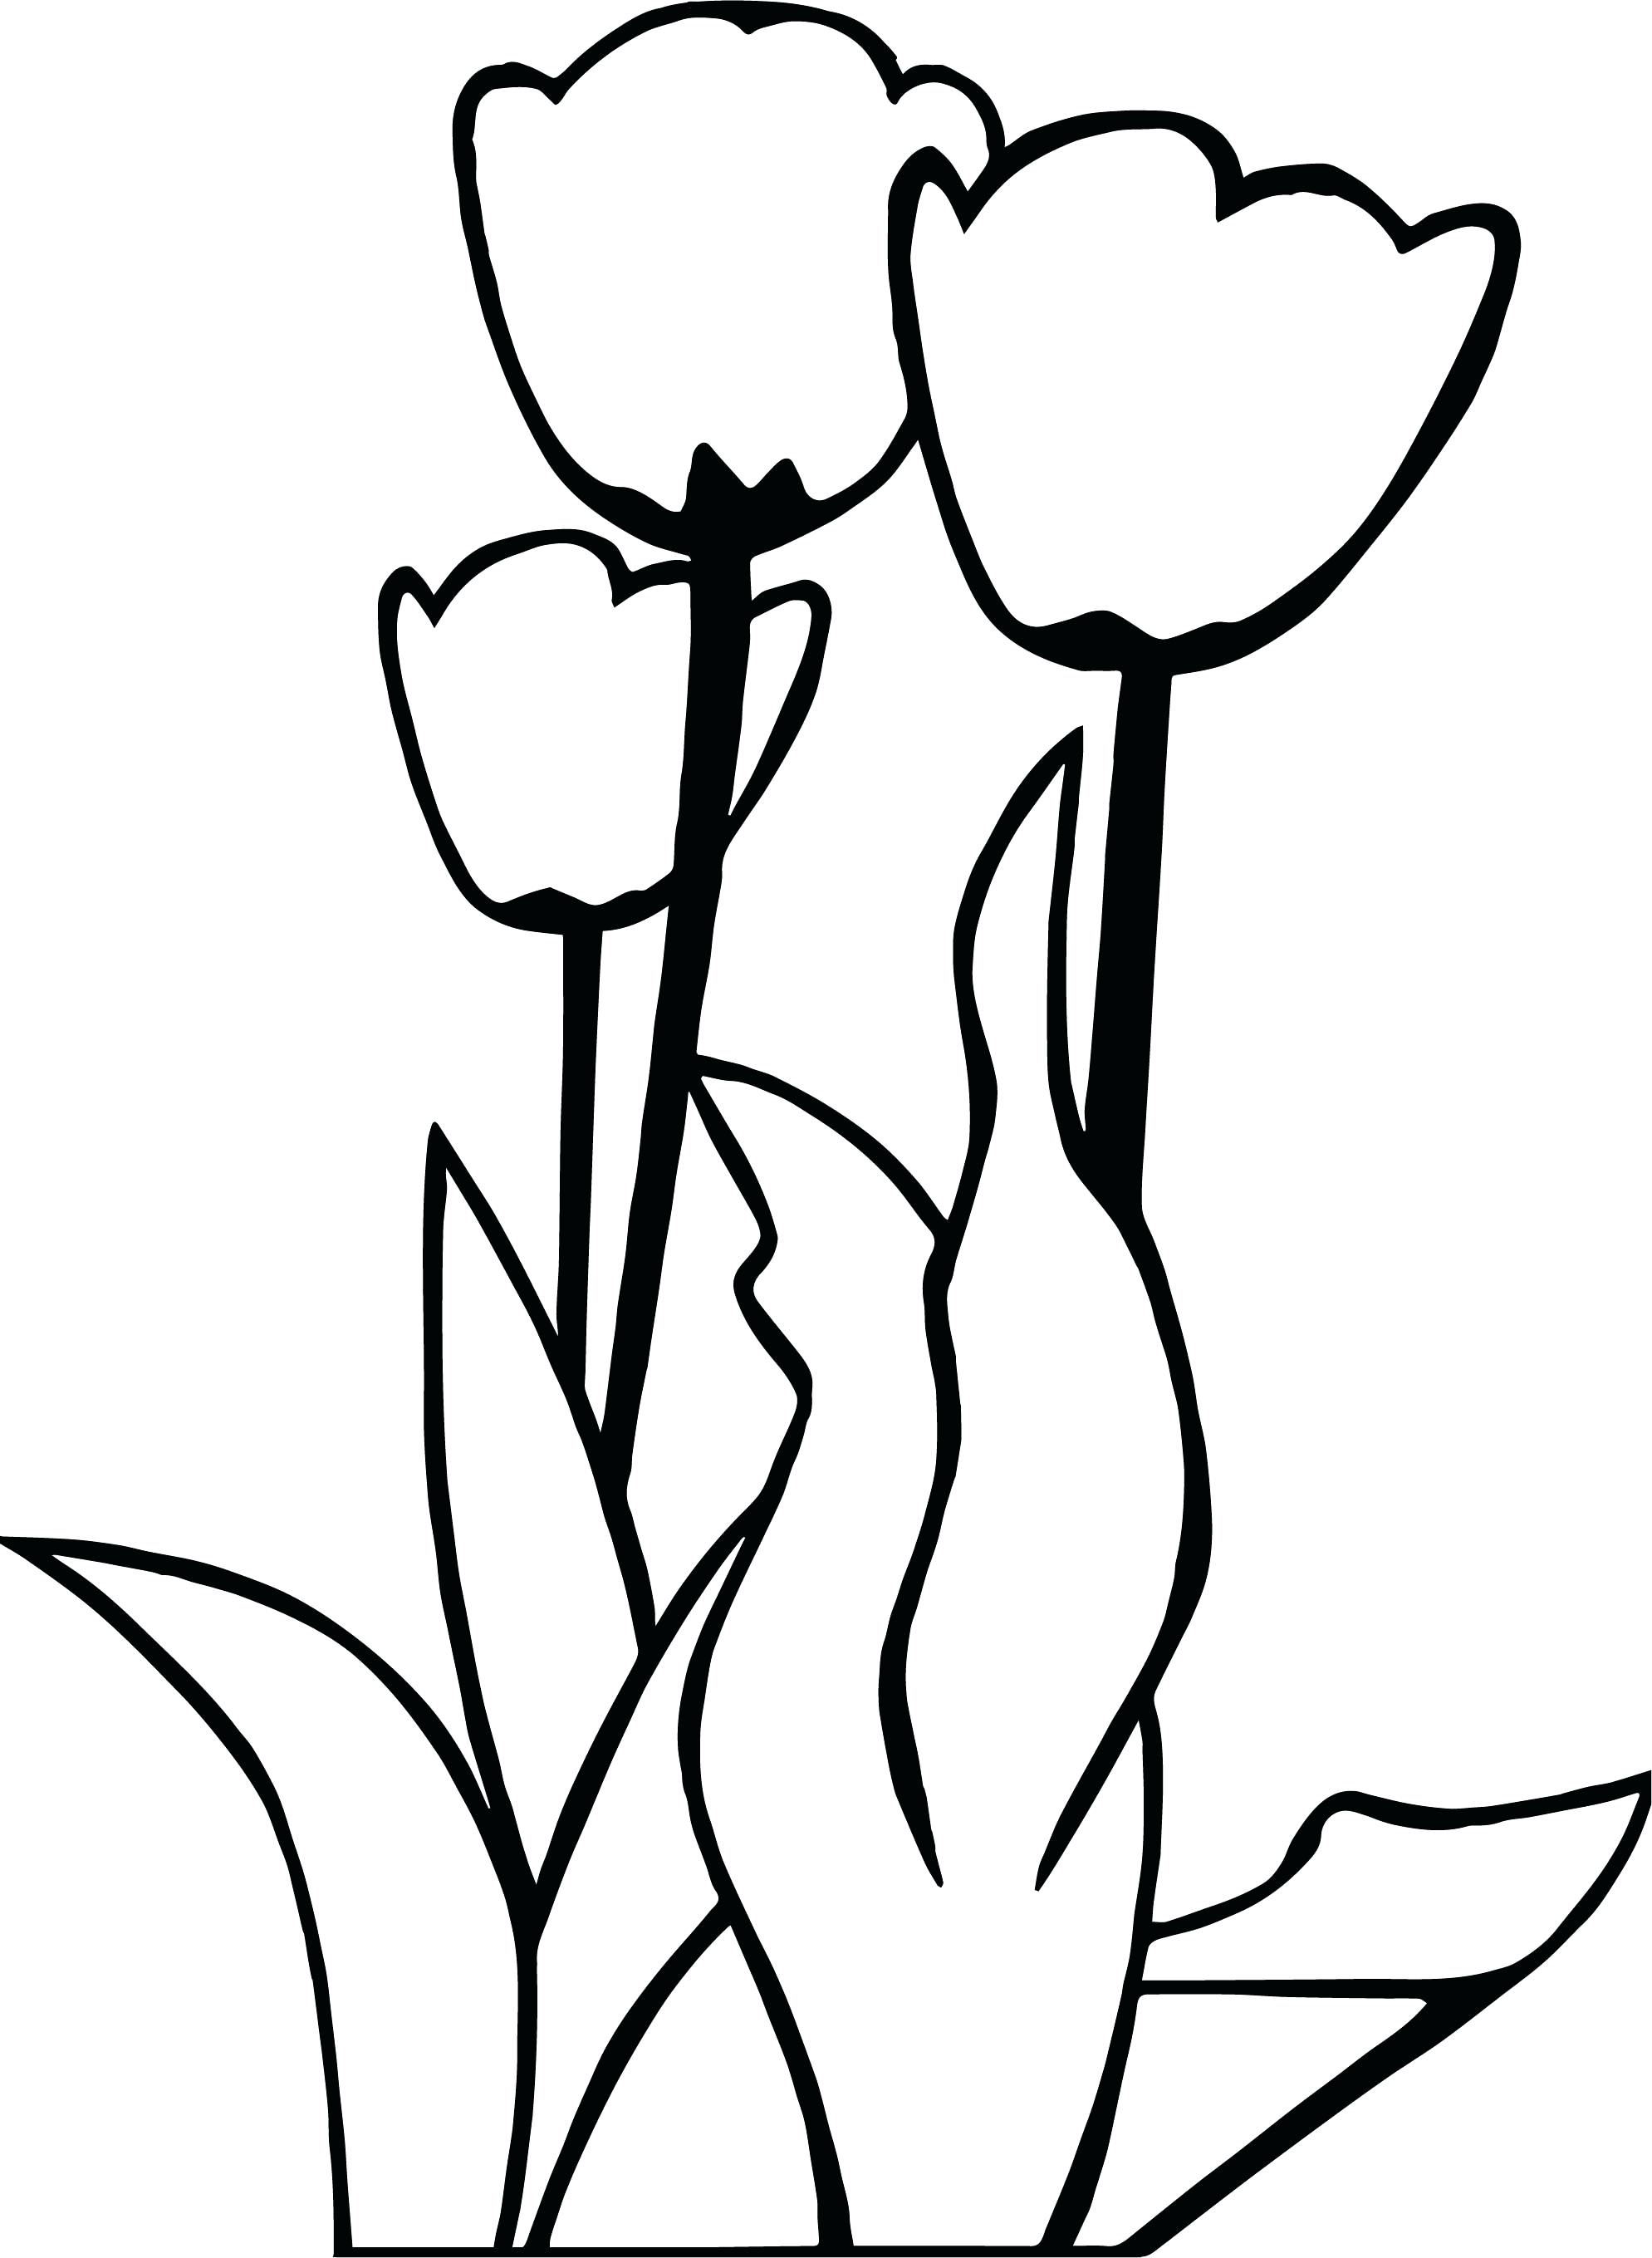 Simple Tulip Drawing at GetDrawings | Free download